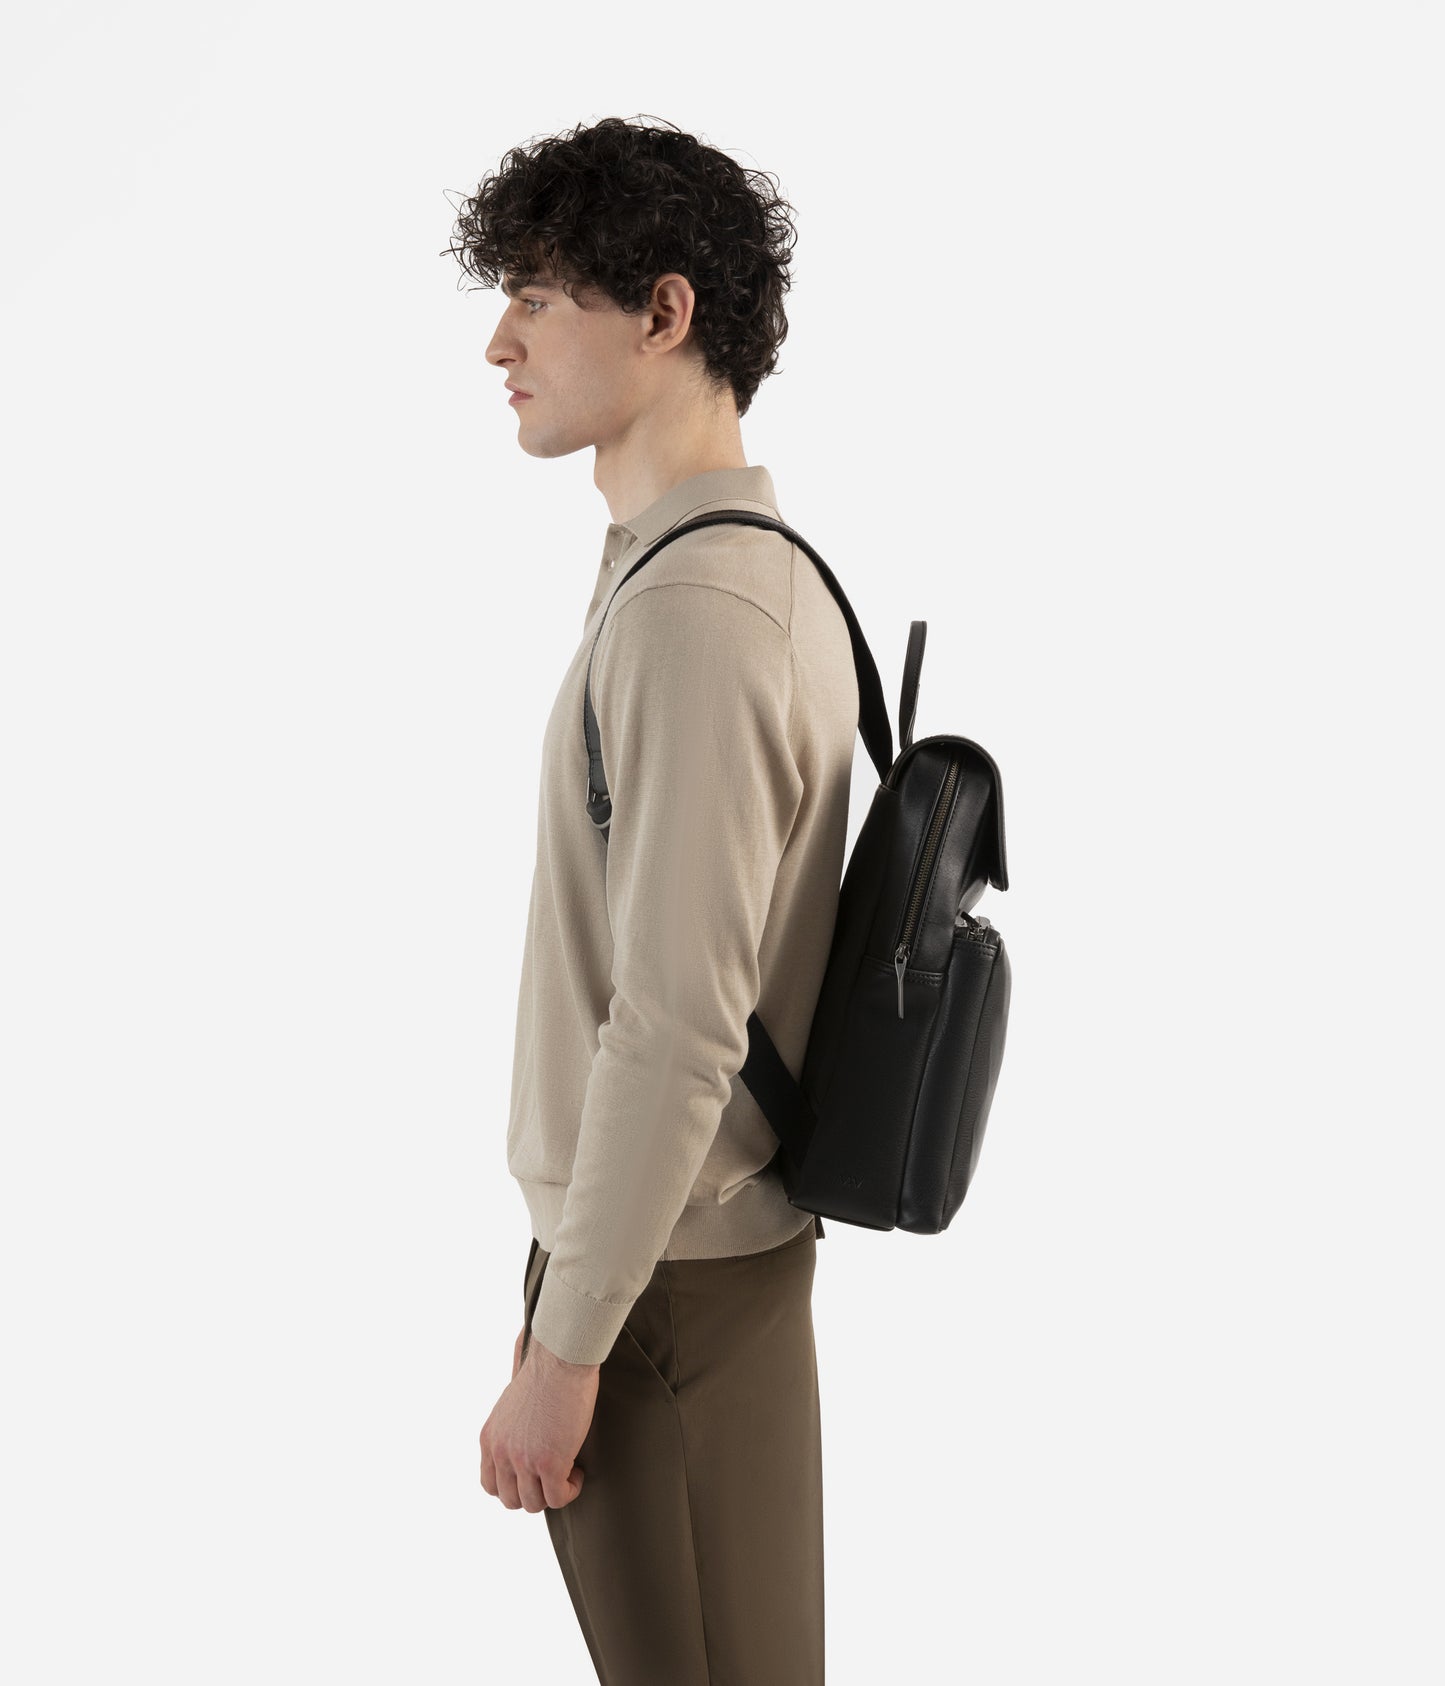 PAXX Vegan Backpack - Vintage | Color: Brown - variant::chili